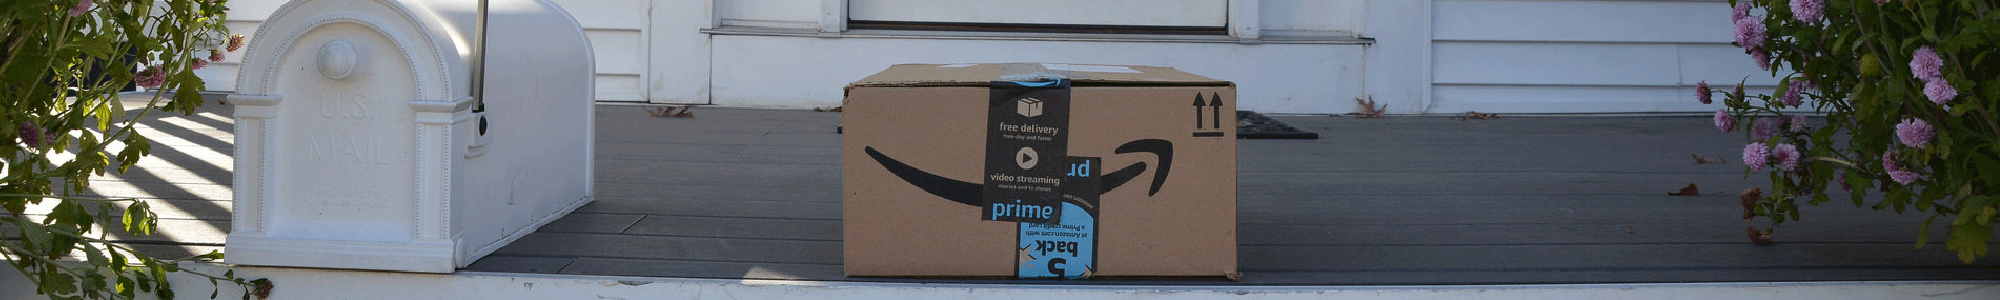 Amazon Prime banner image